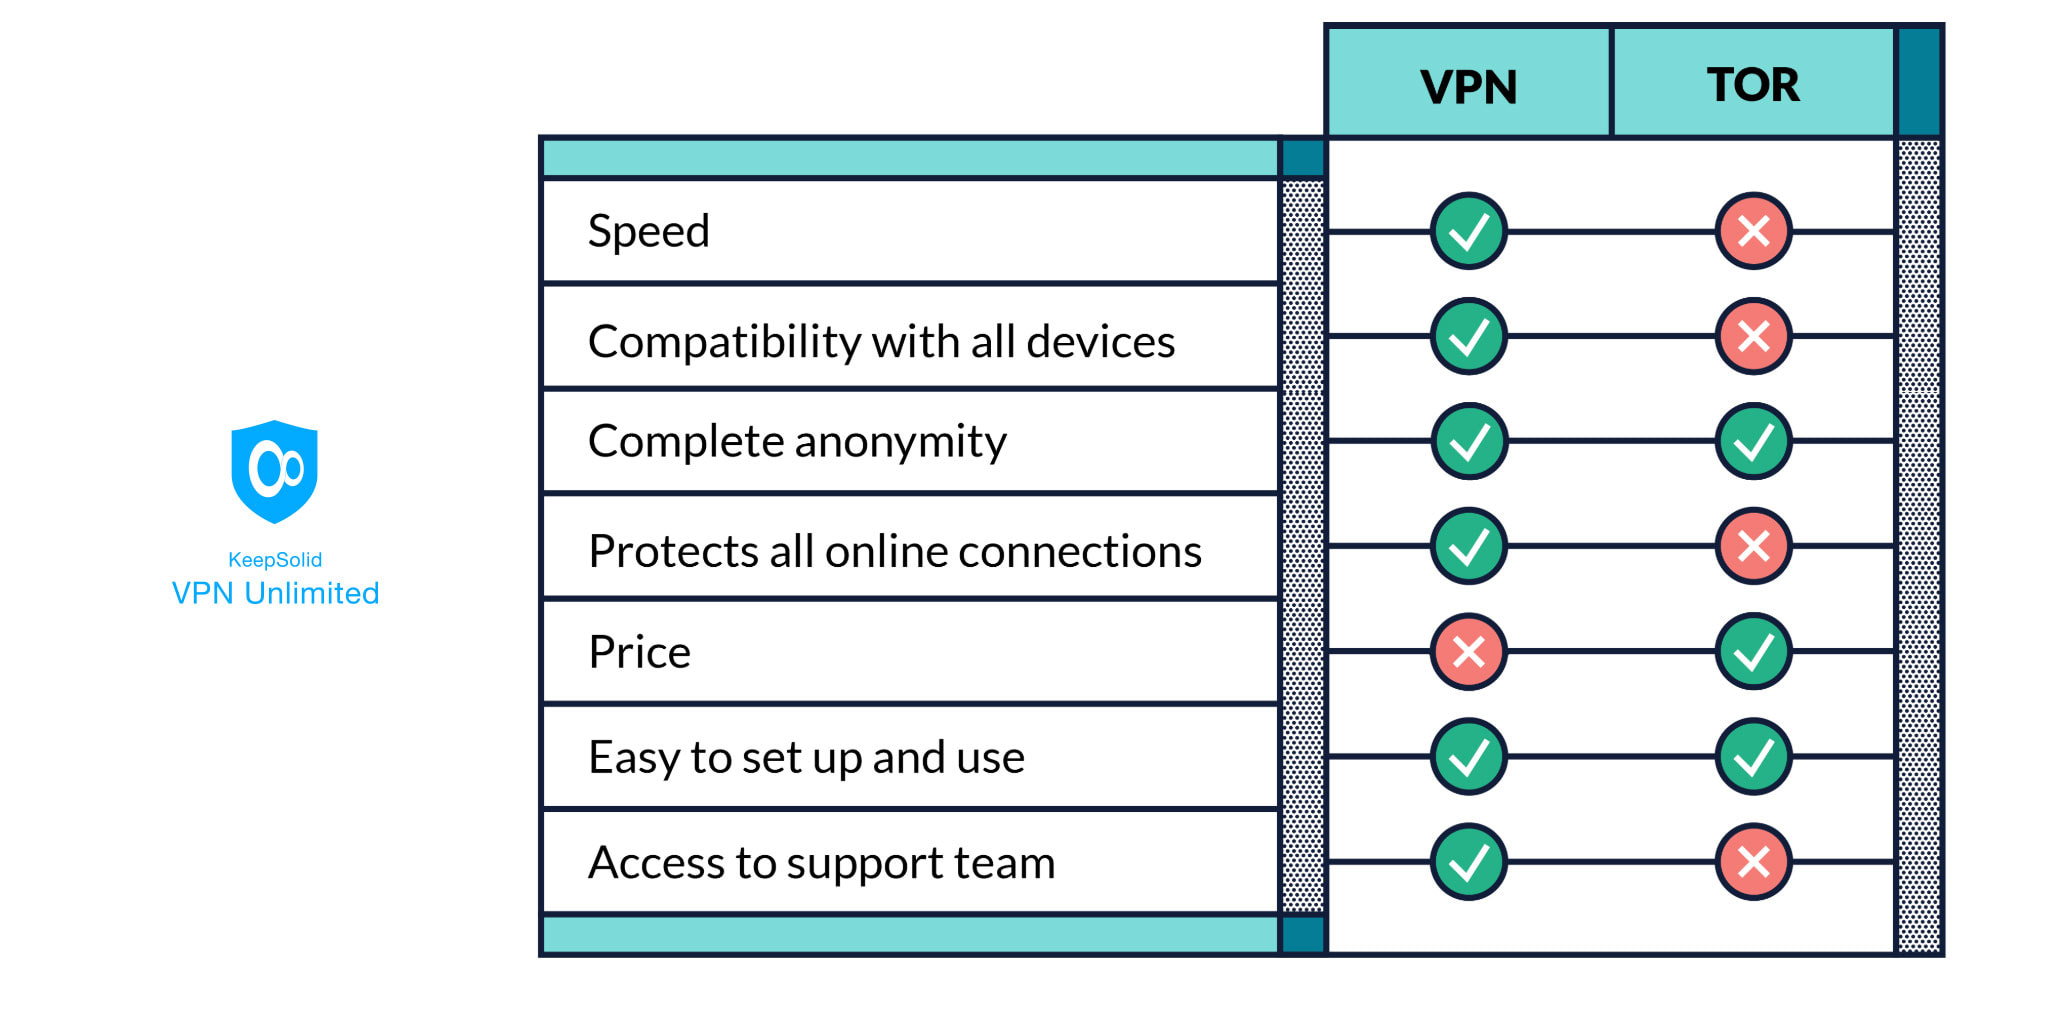 Tor vs VPN - comparison of features